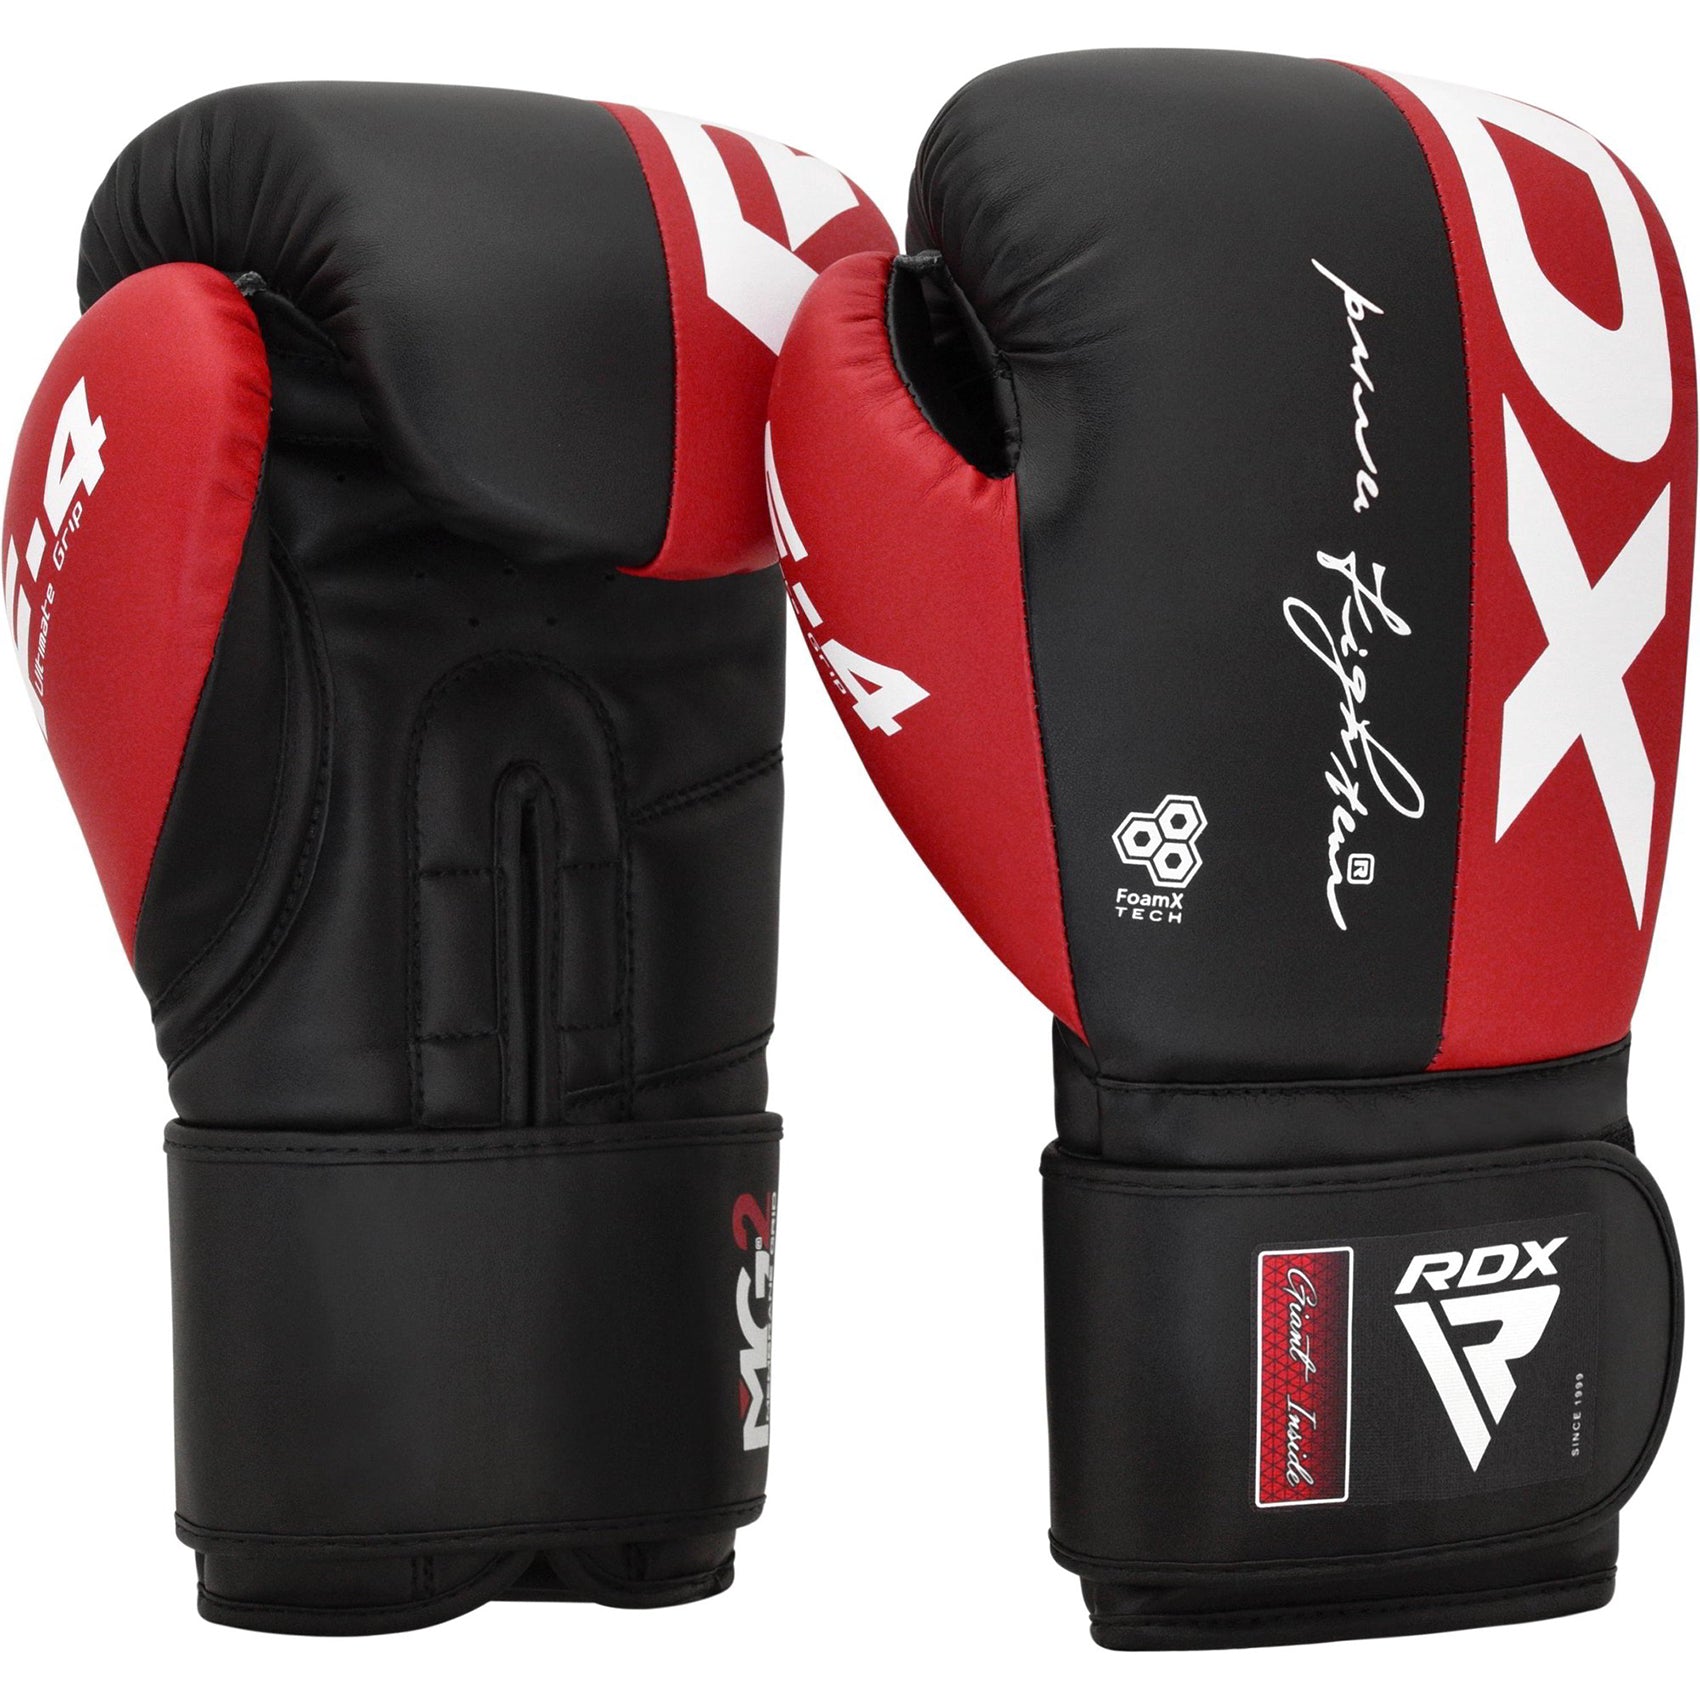 RDX REX F4 MMA, BJJ, Muay Thai, Kickboxing, Training Boxing Gloves - RED/BLACK - 10 oz - Pro-Distributing